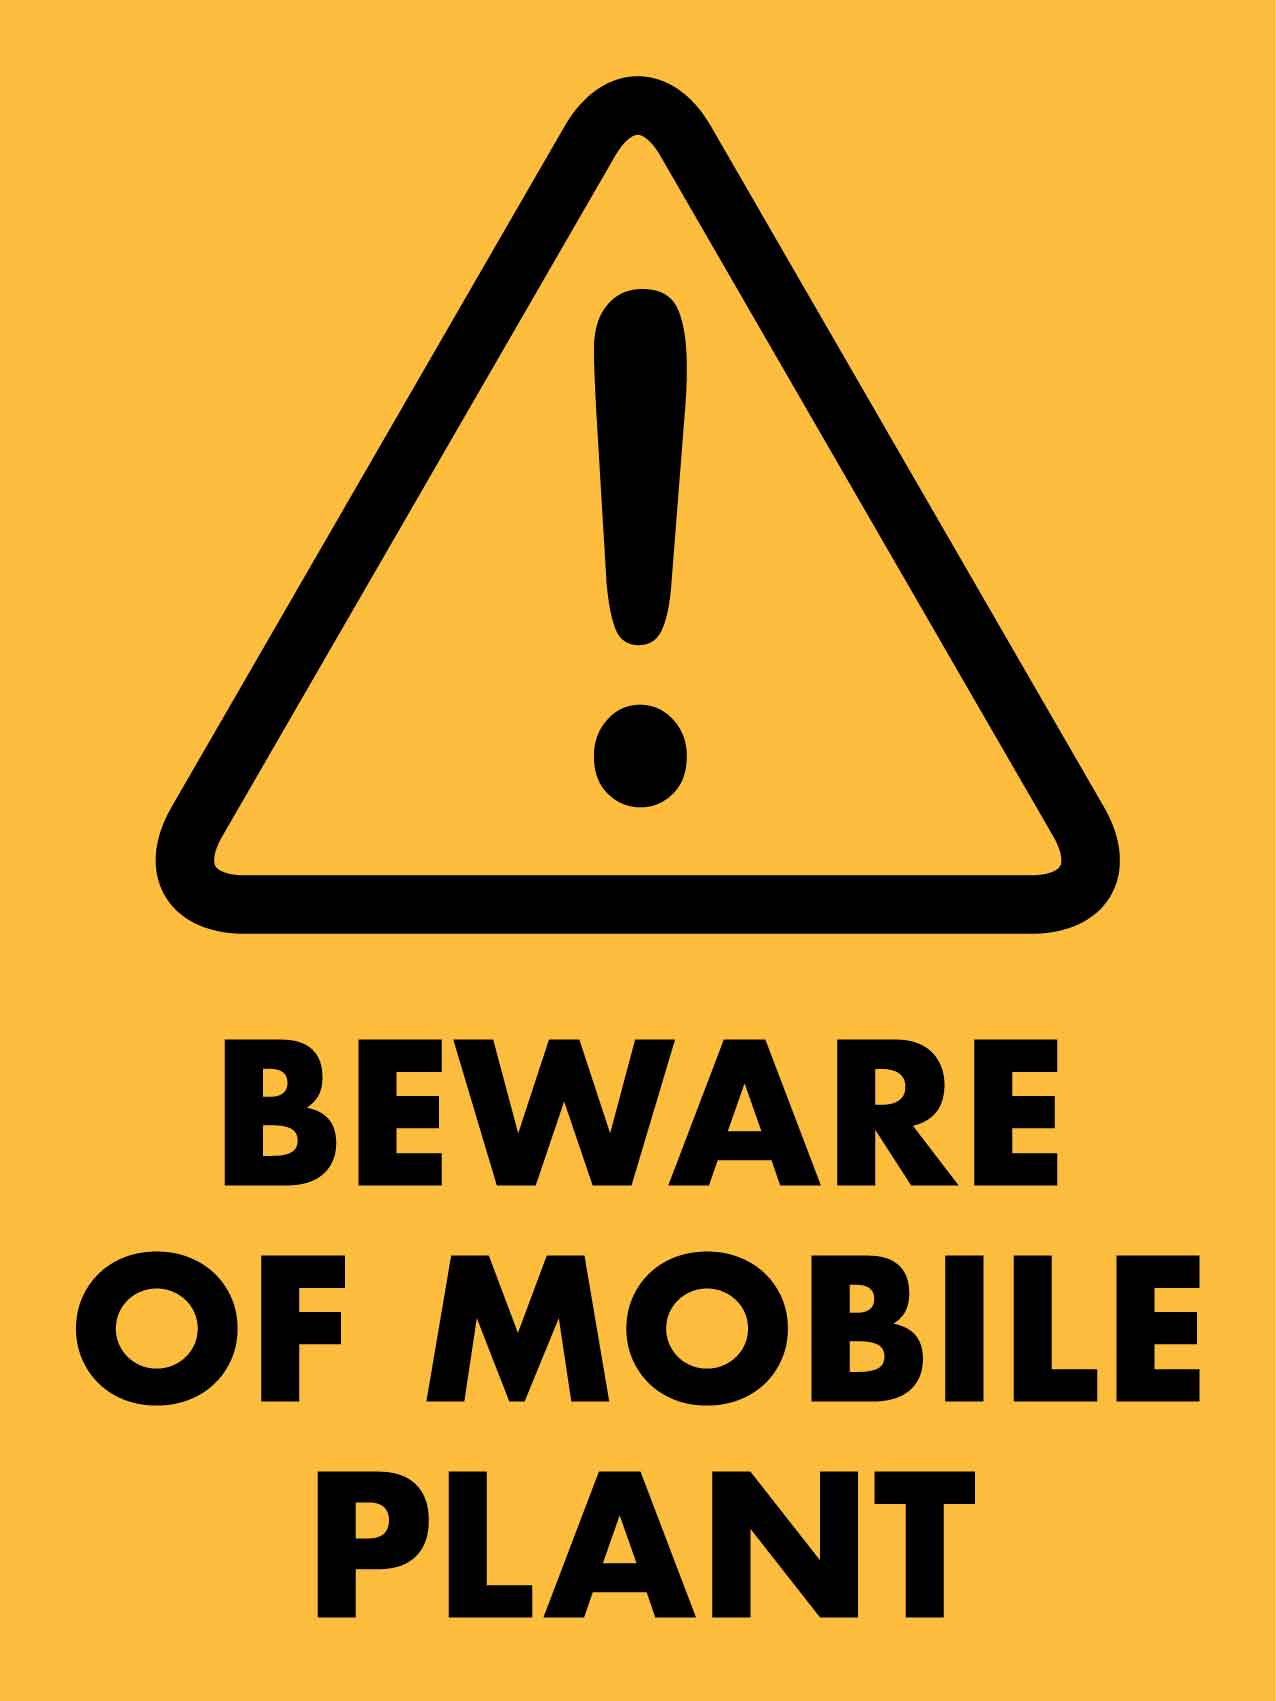 Warning Beware Mobile Plant Sign